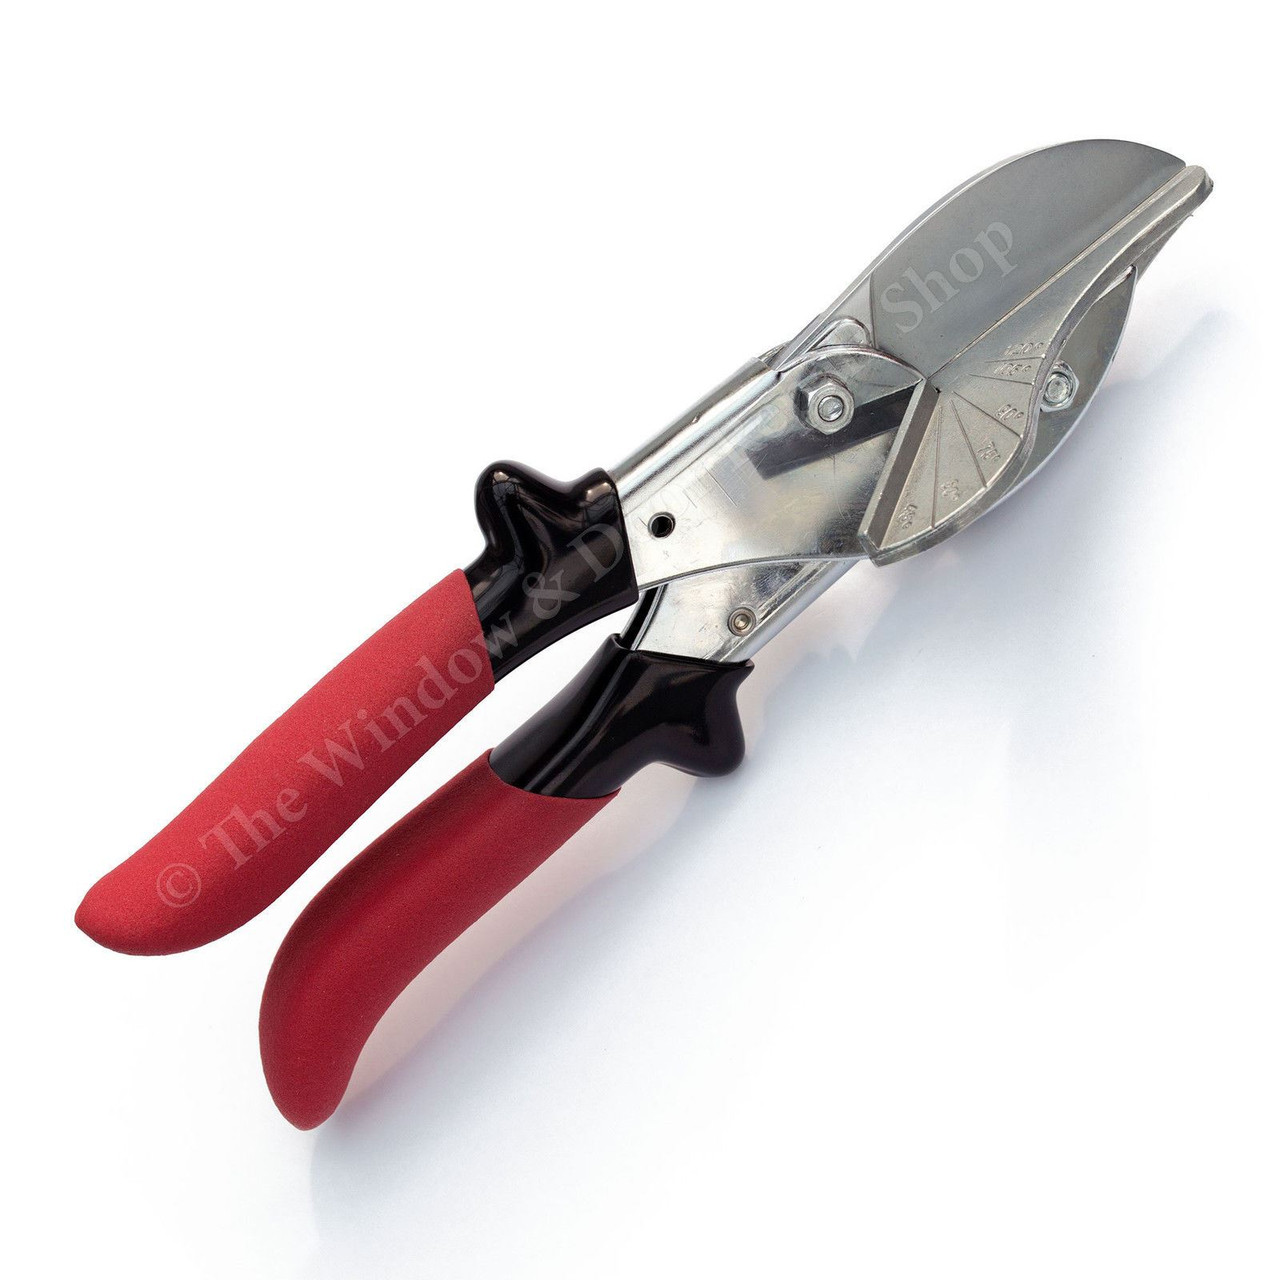 Gasket Mitre Shear Angle Snips Xpert Rubber uPVC Plastic Trim Bead Cutter  SK2